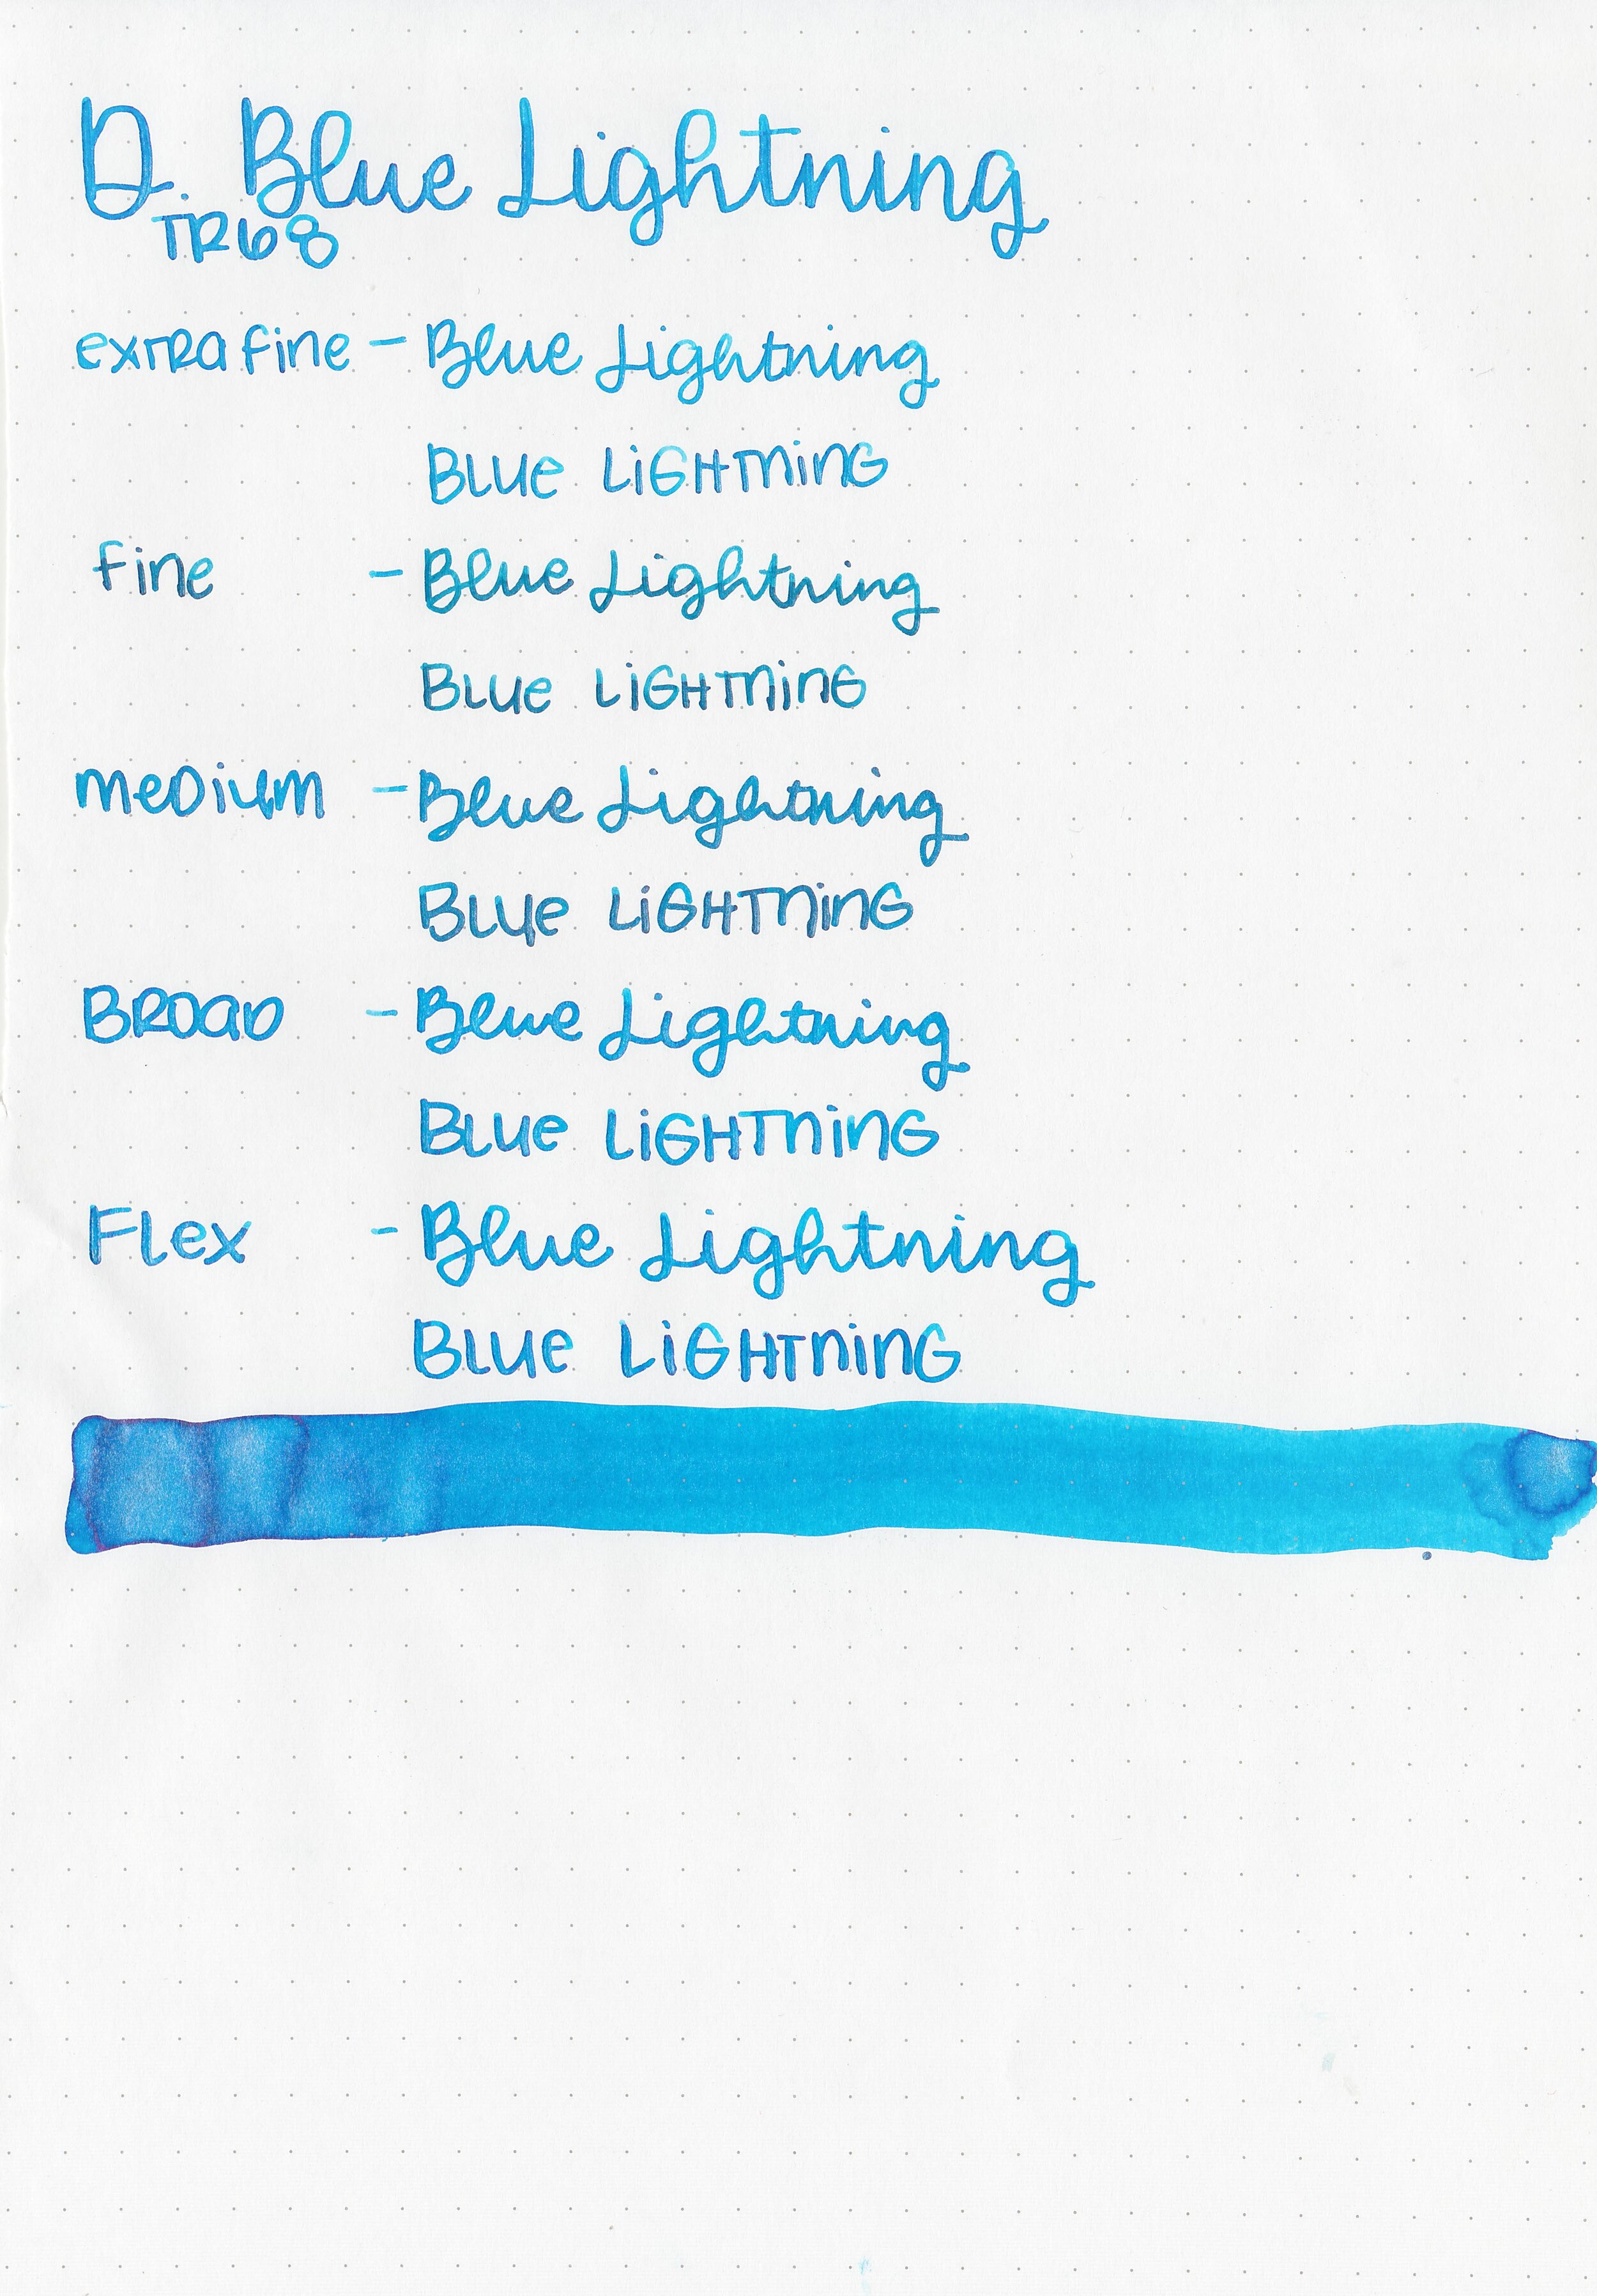 d-blue-lightning-7.jpg